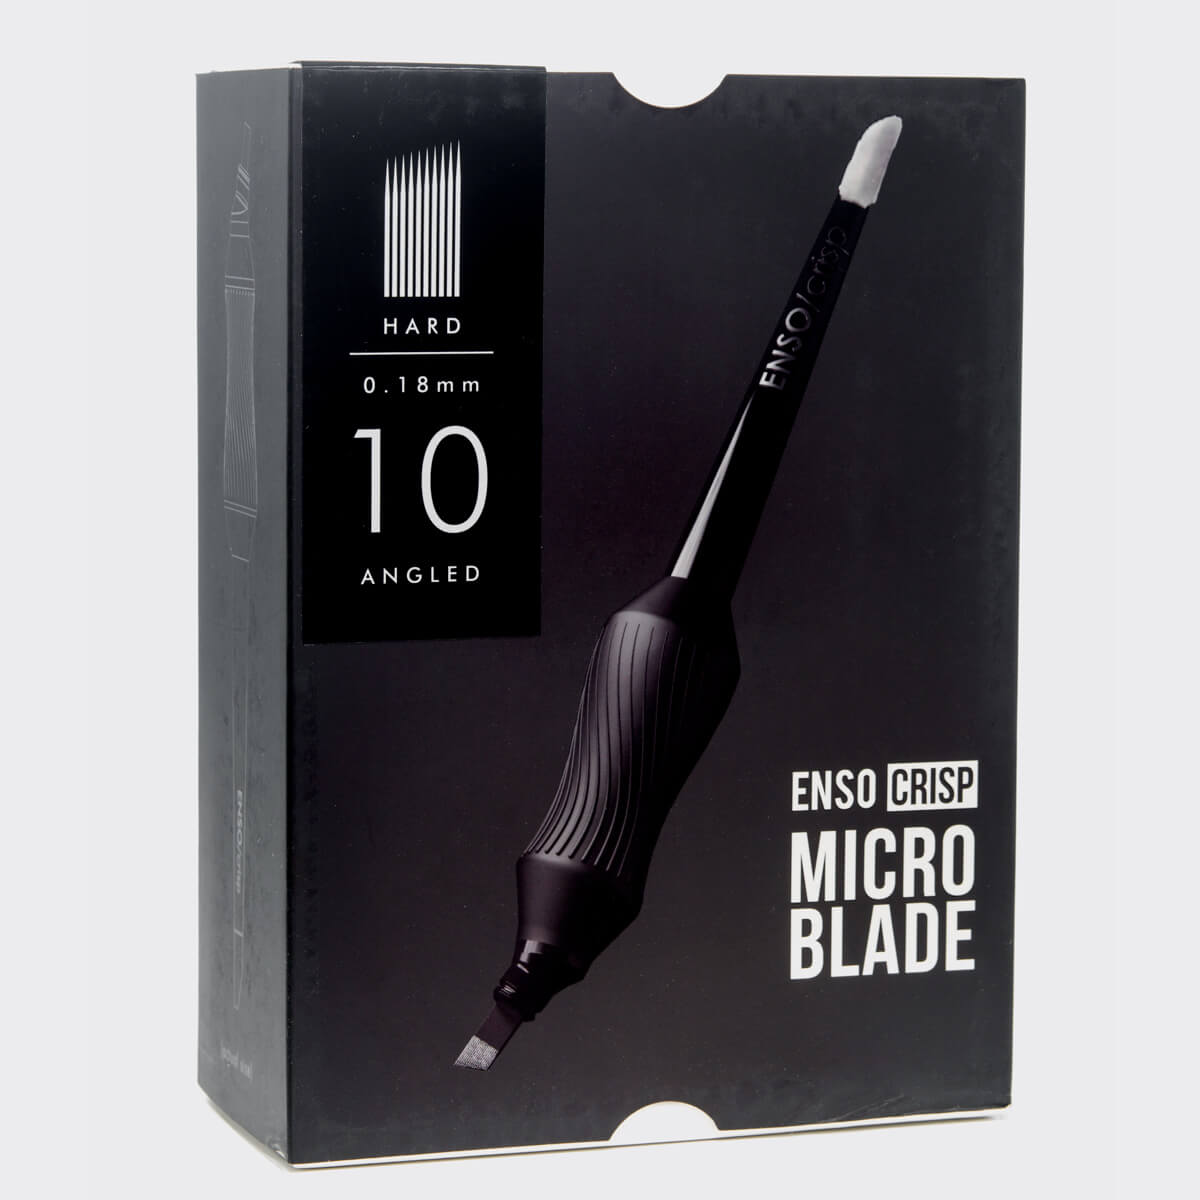 ENSO Crisp Microblades - Hard Angled Steel Blade